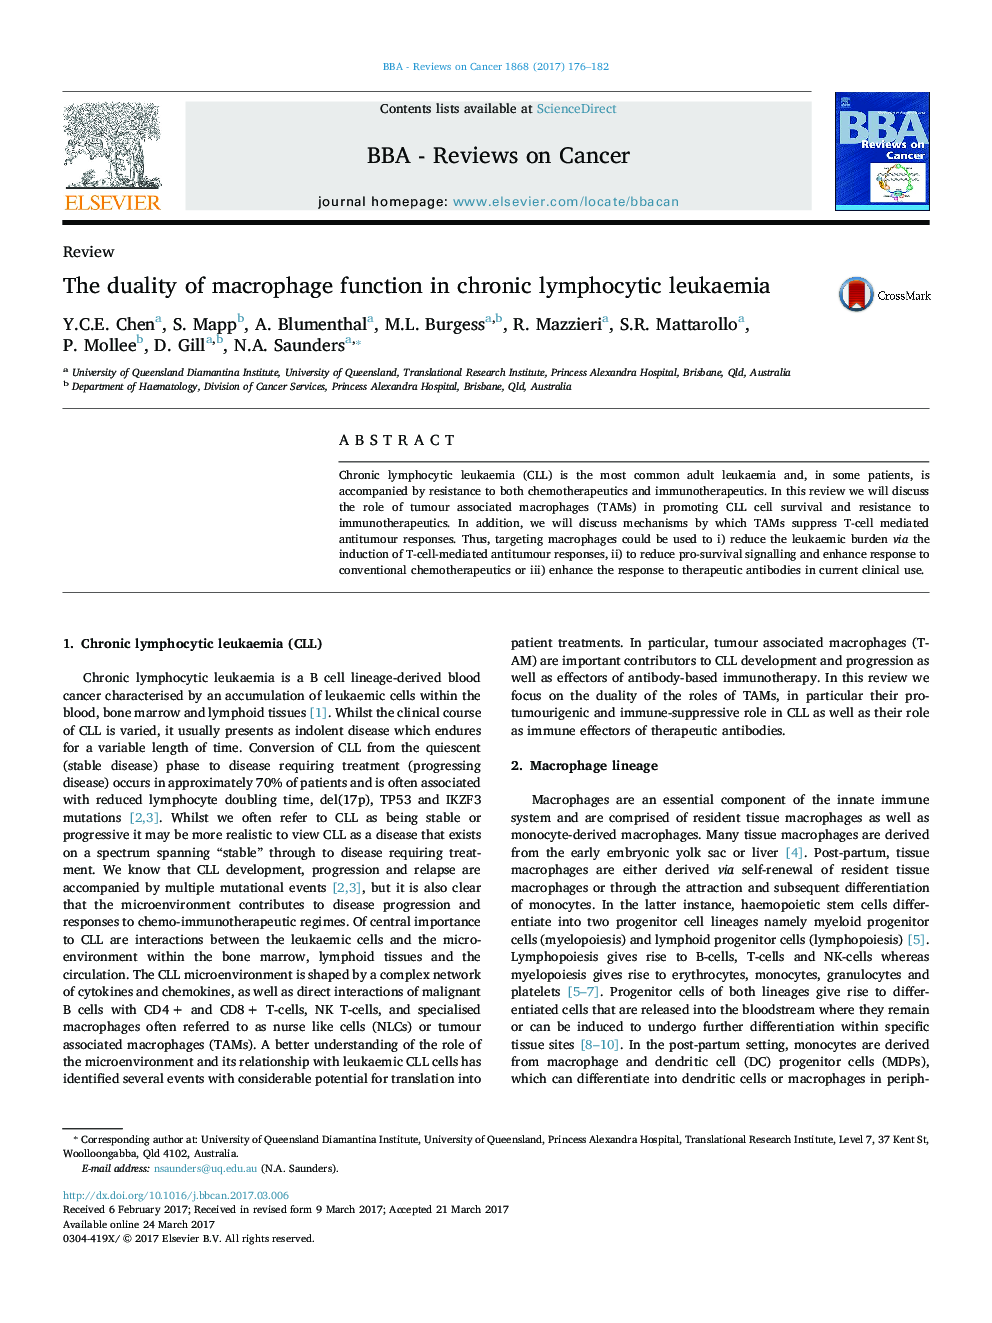 ReviewThe duality of macrophage function in chronic lymphocytic leukaemia